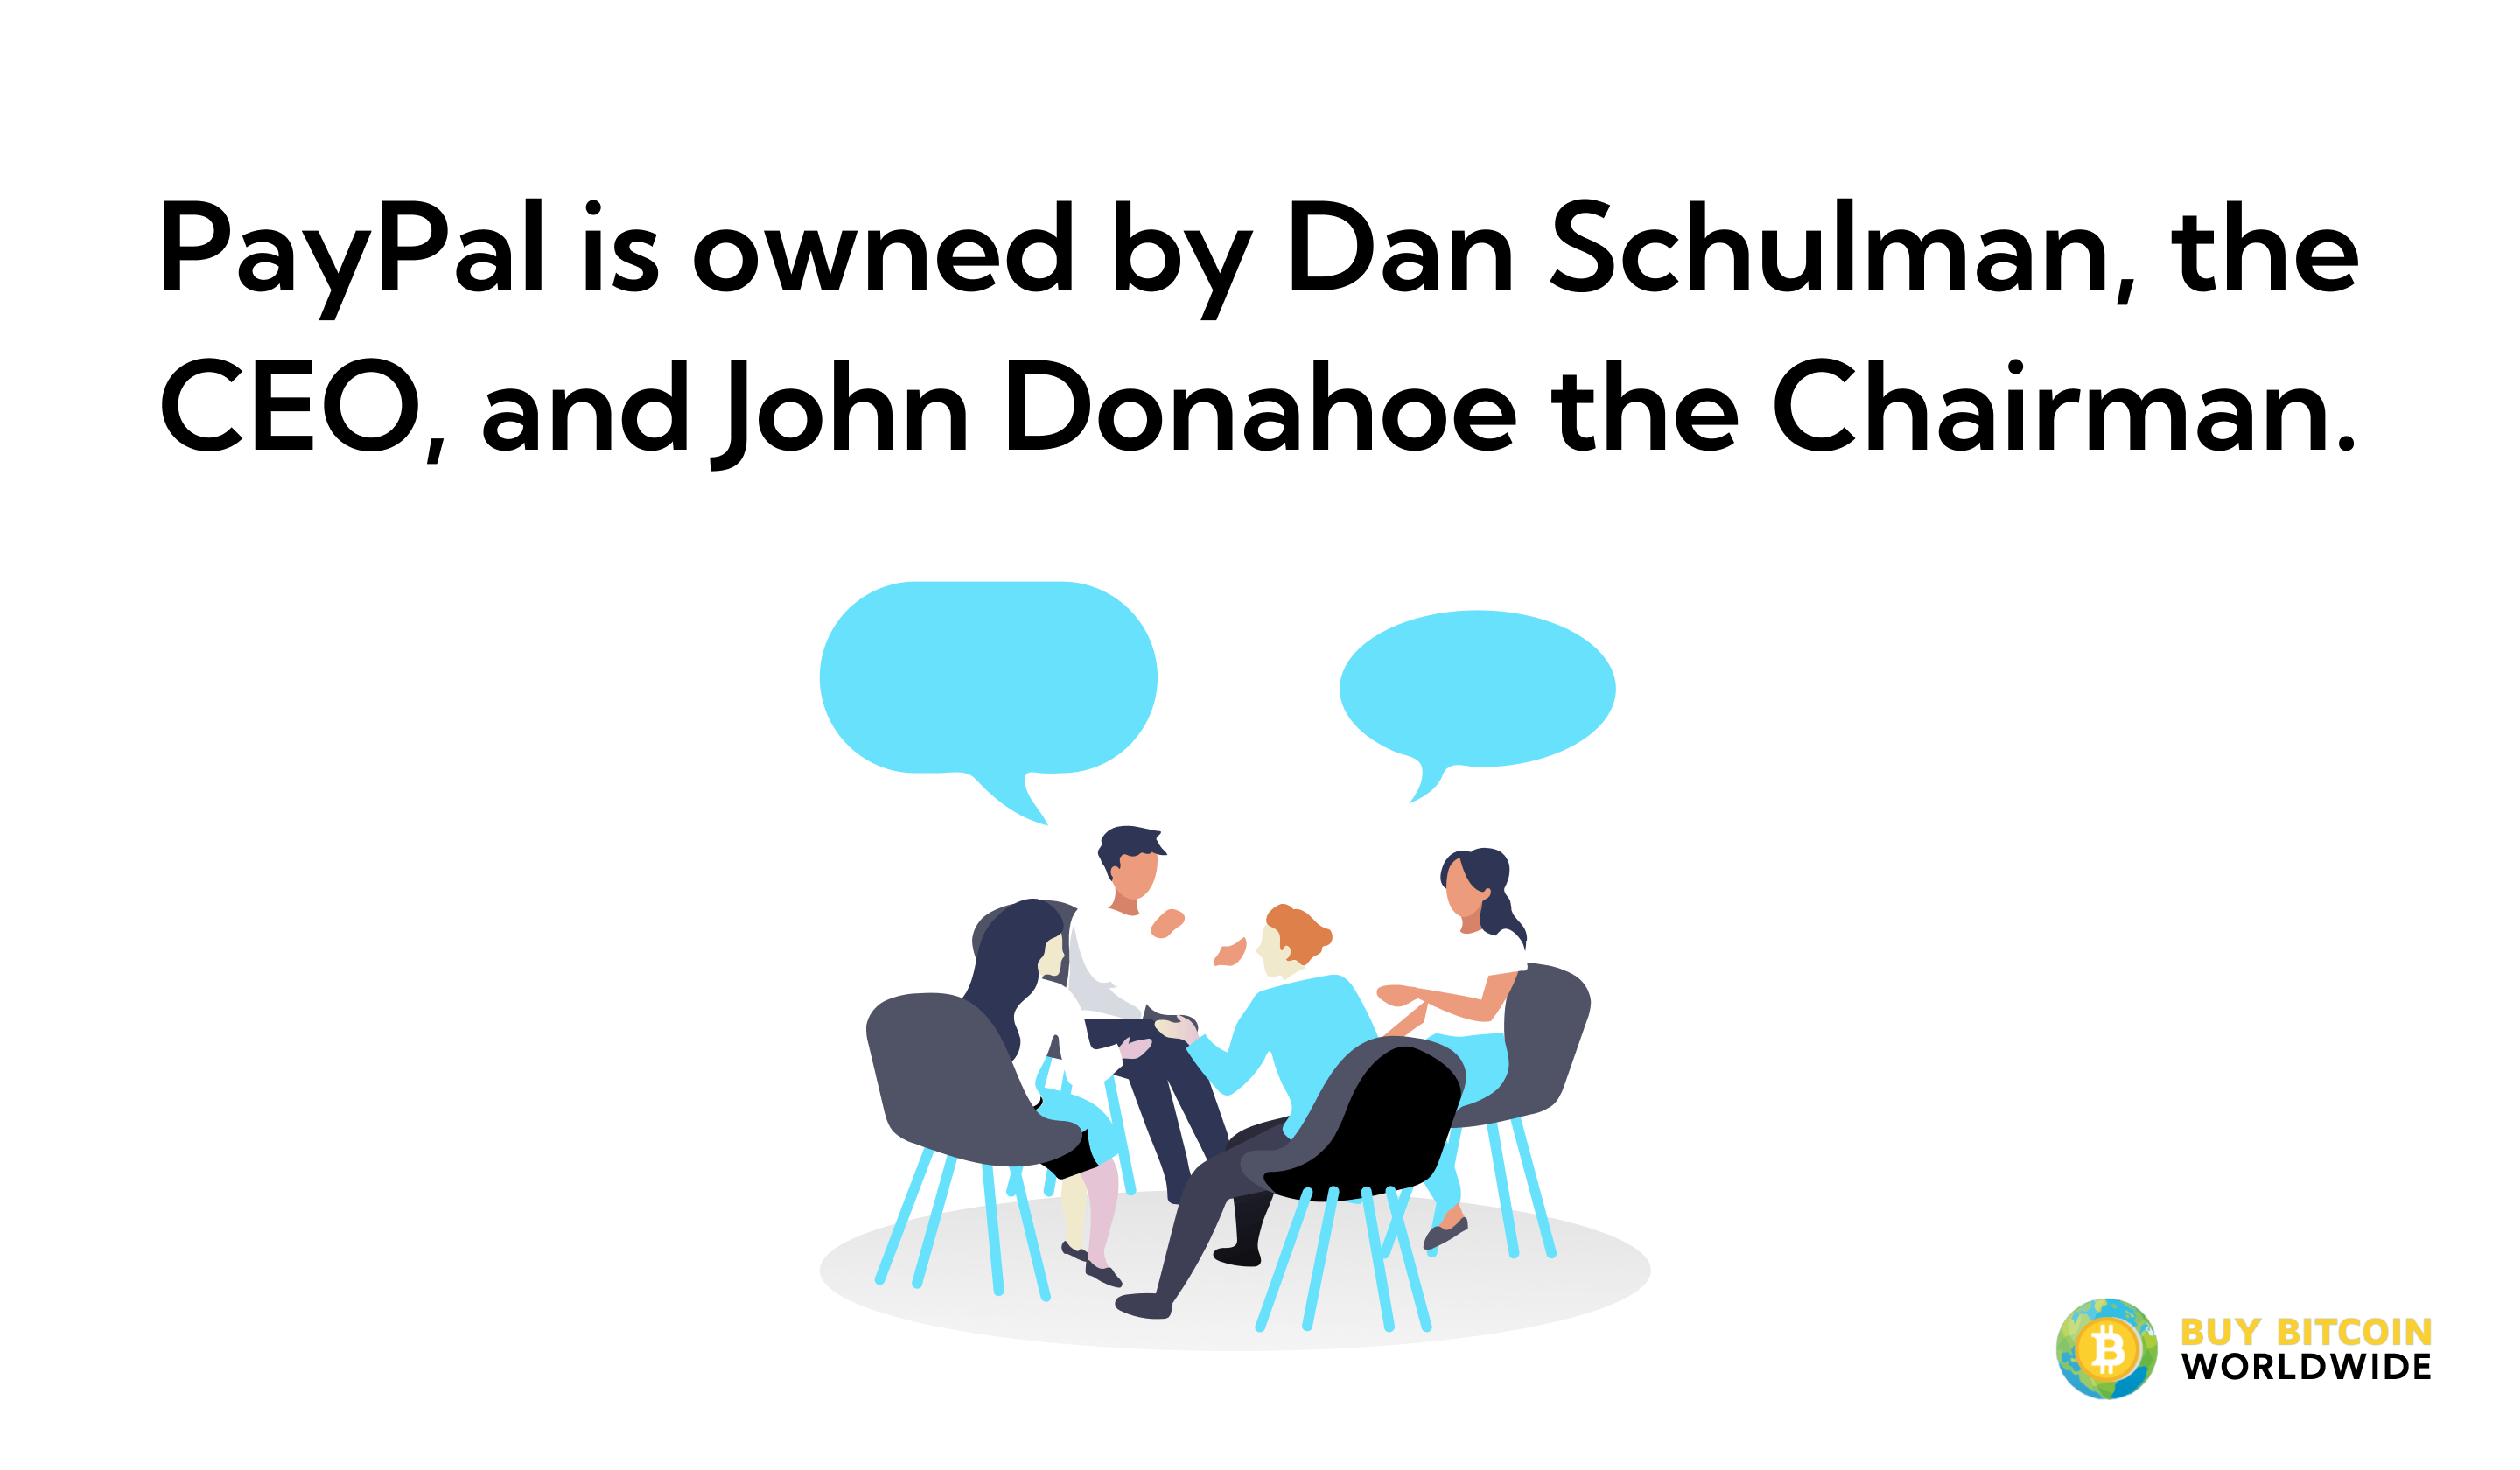 dan schulman and john donahoe own paypal